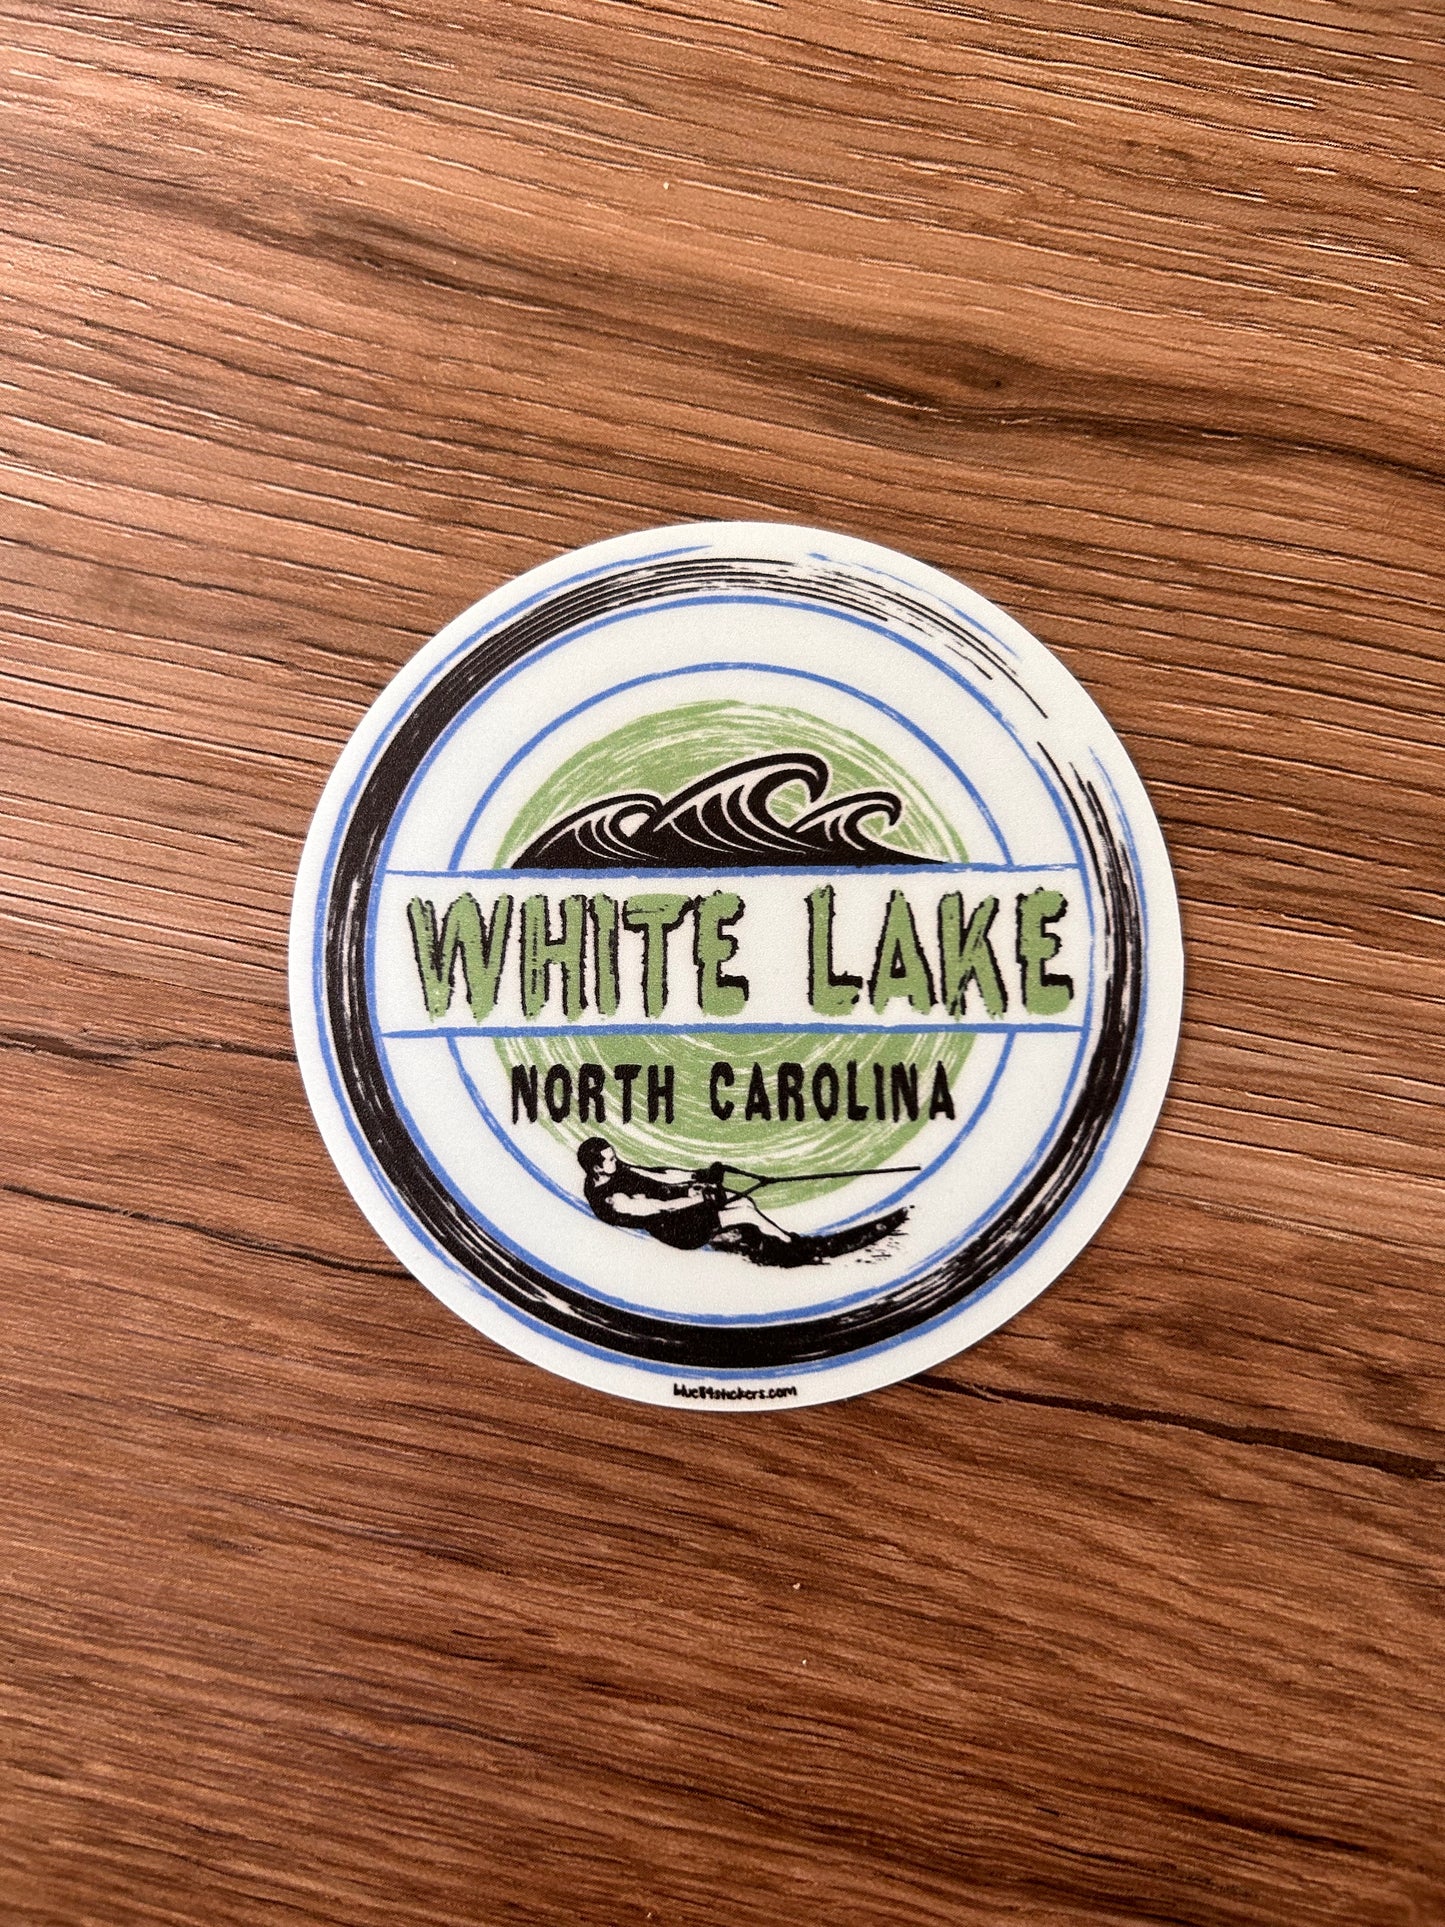 White Lake Sticker - Slow Roller Water Skier